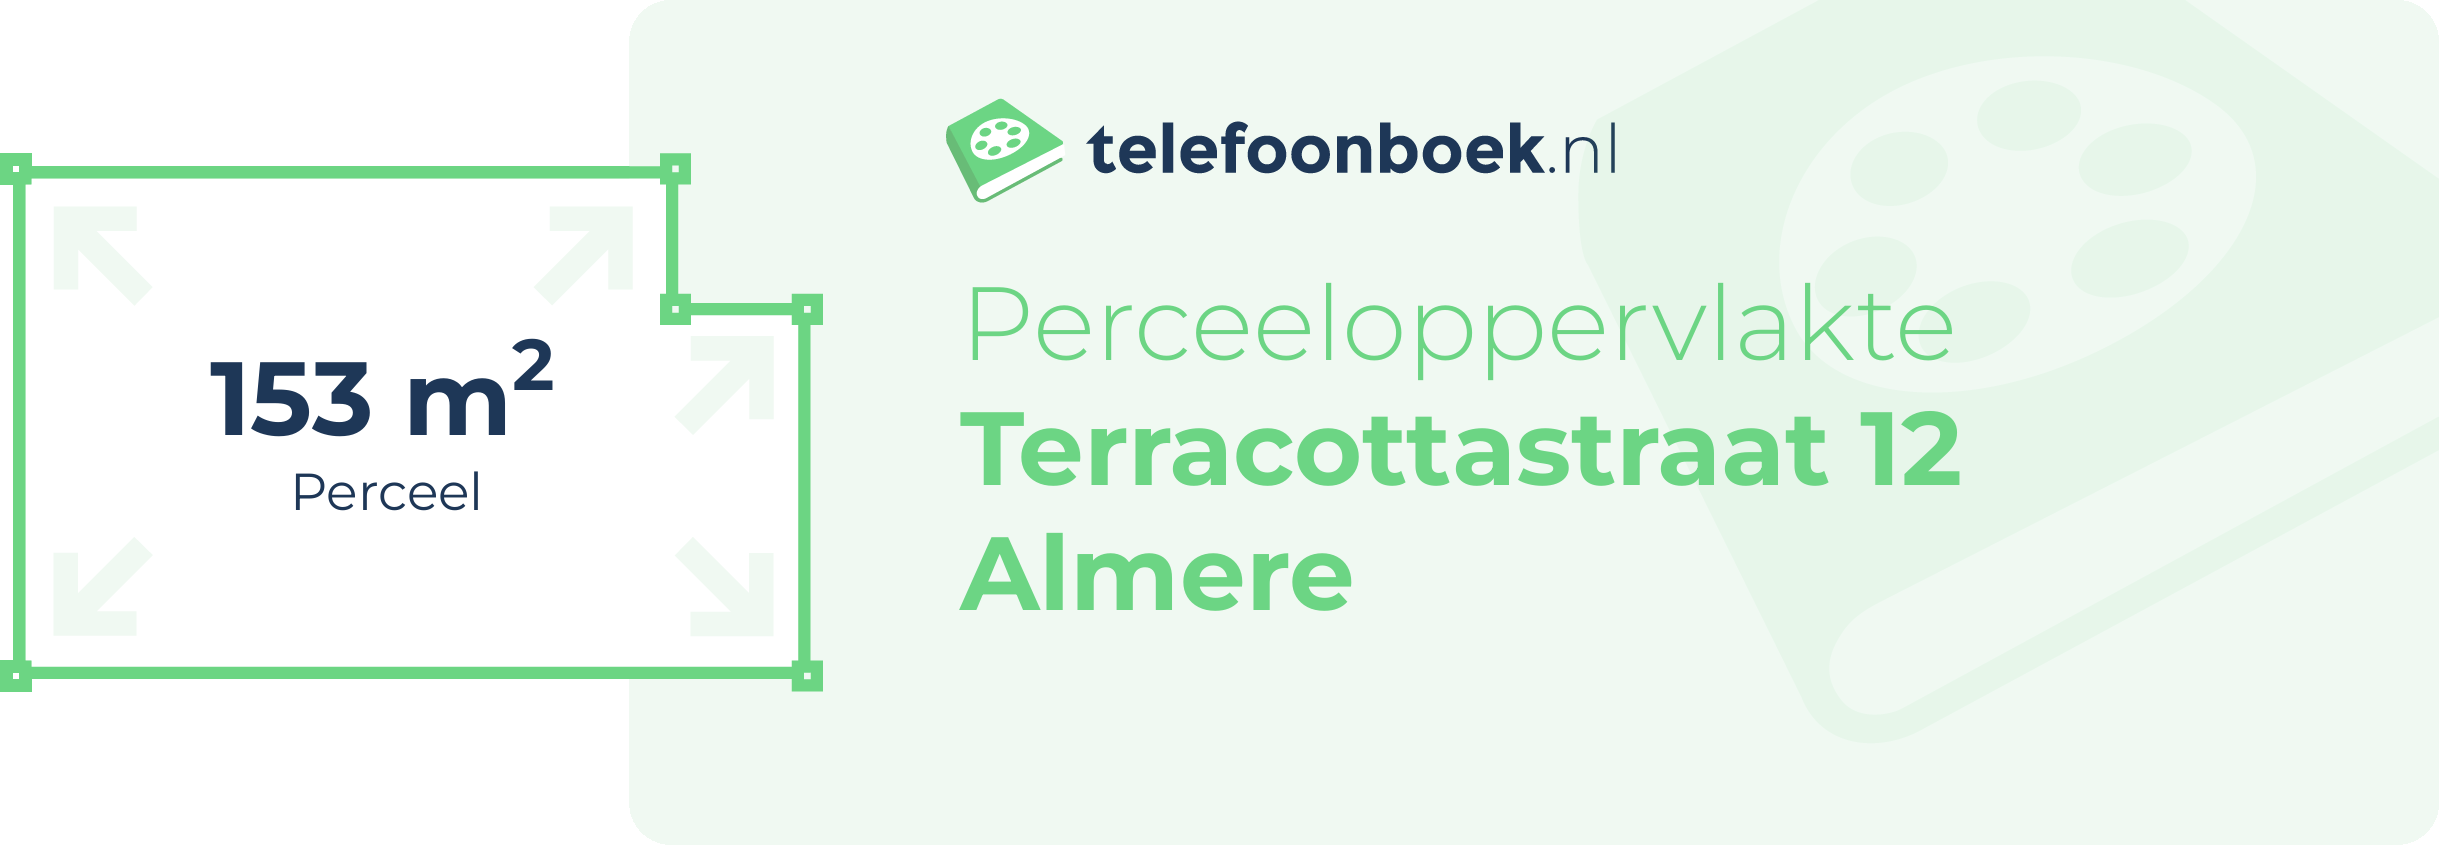 Perceeloppervlakte Terracottastraat 12 Almere